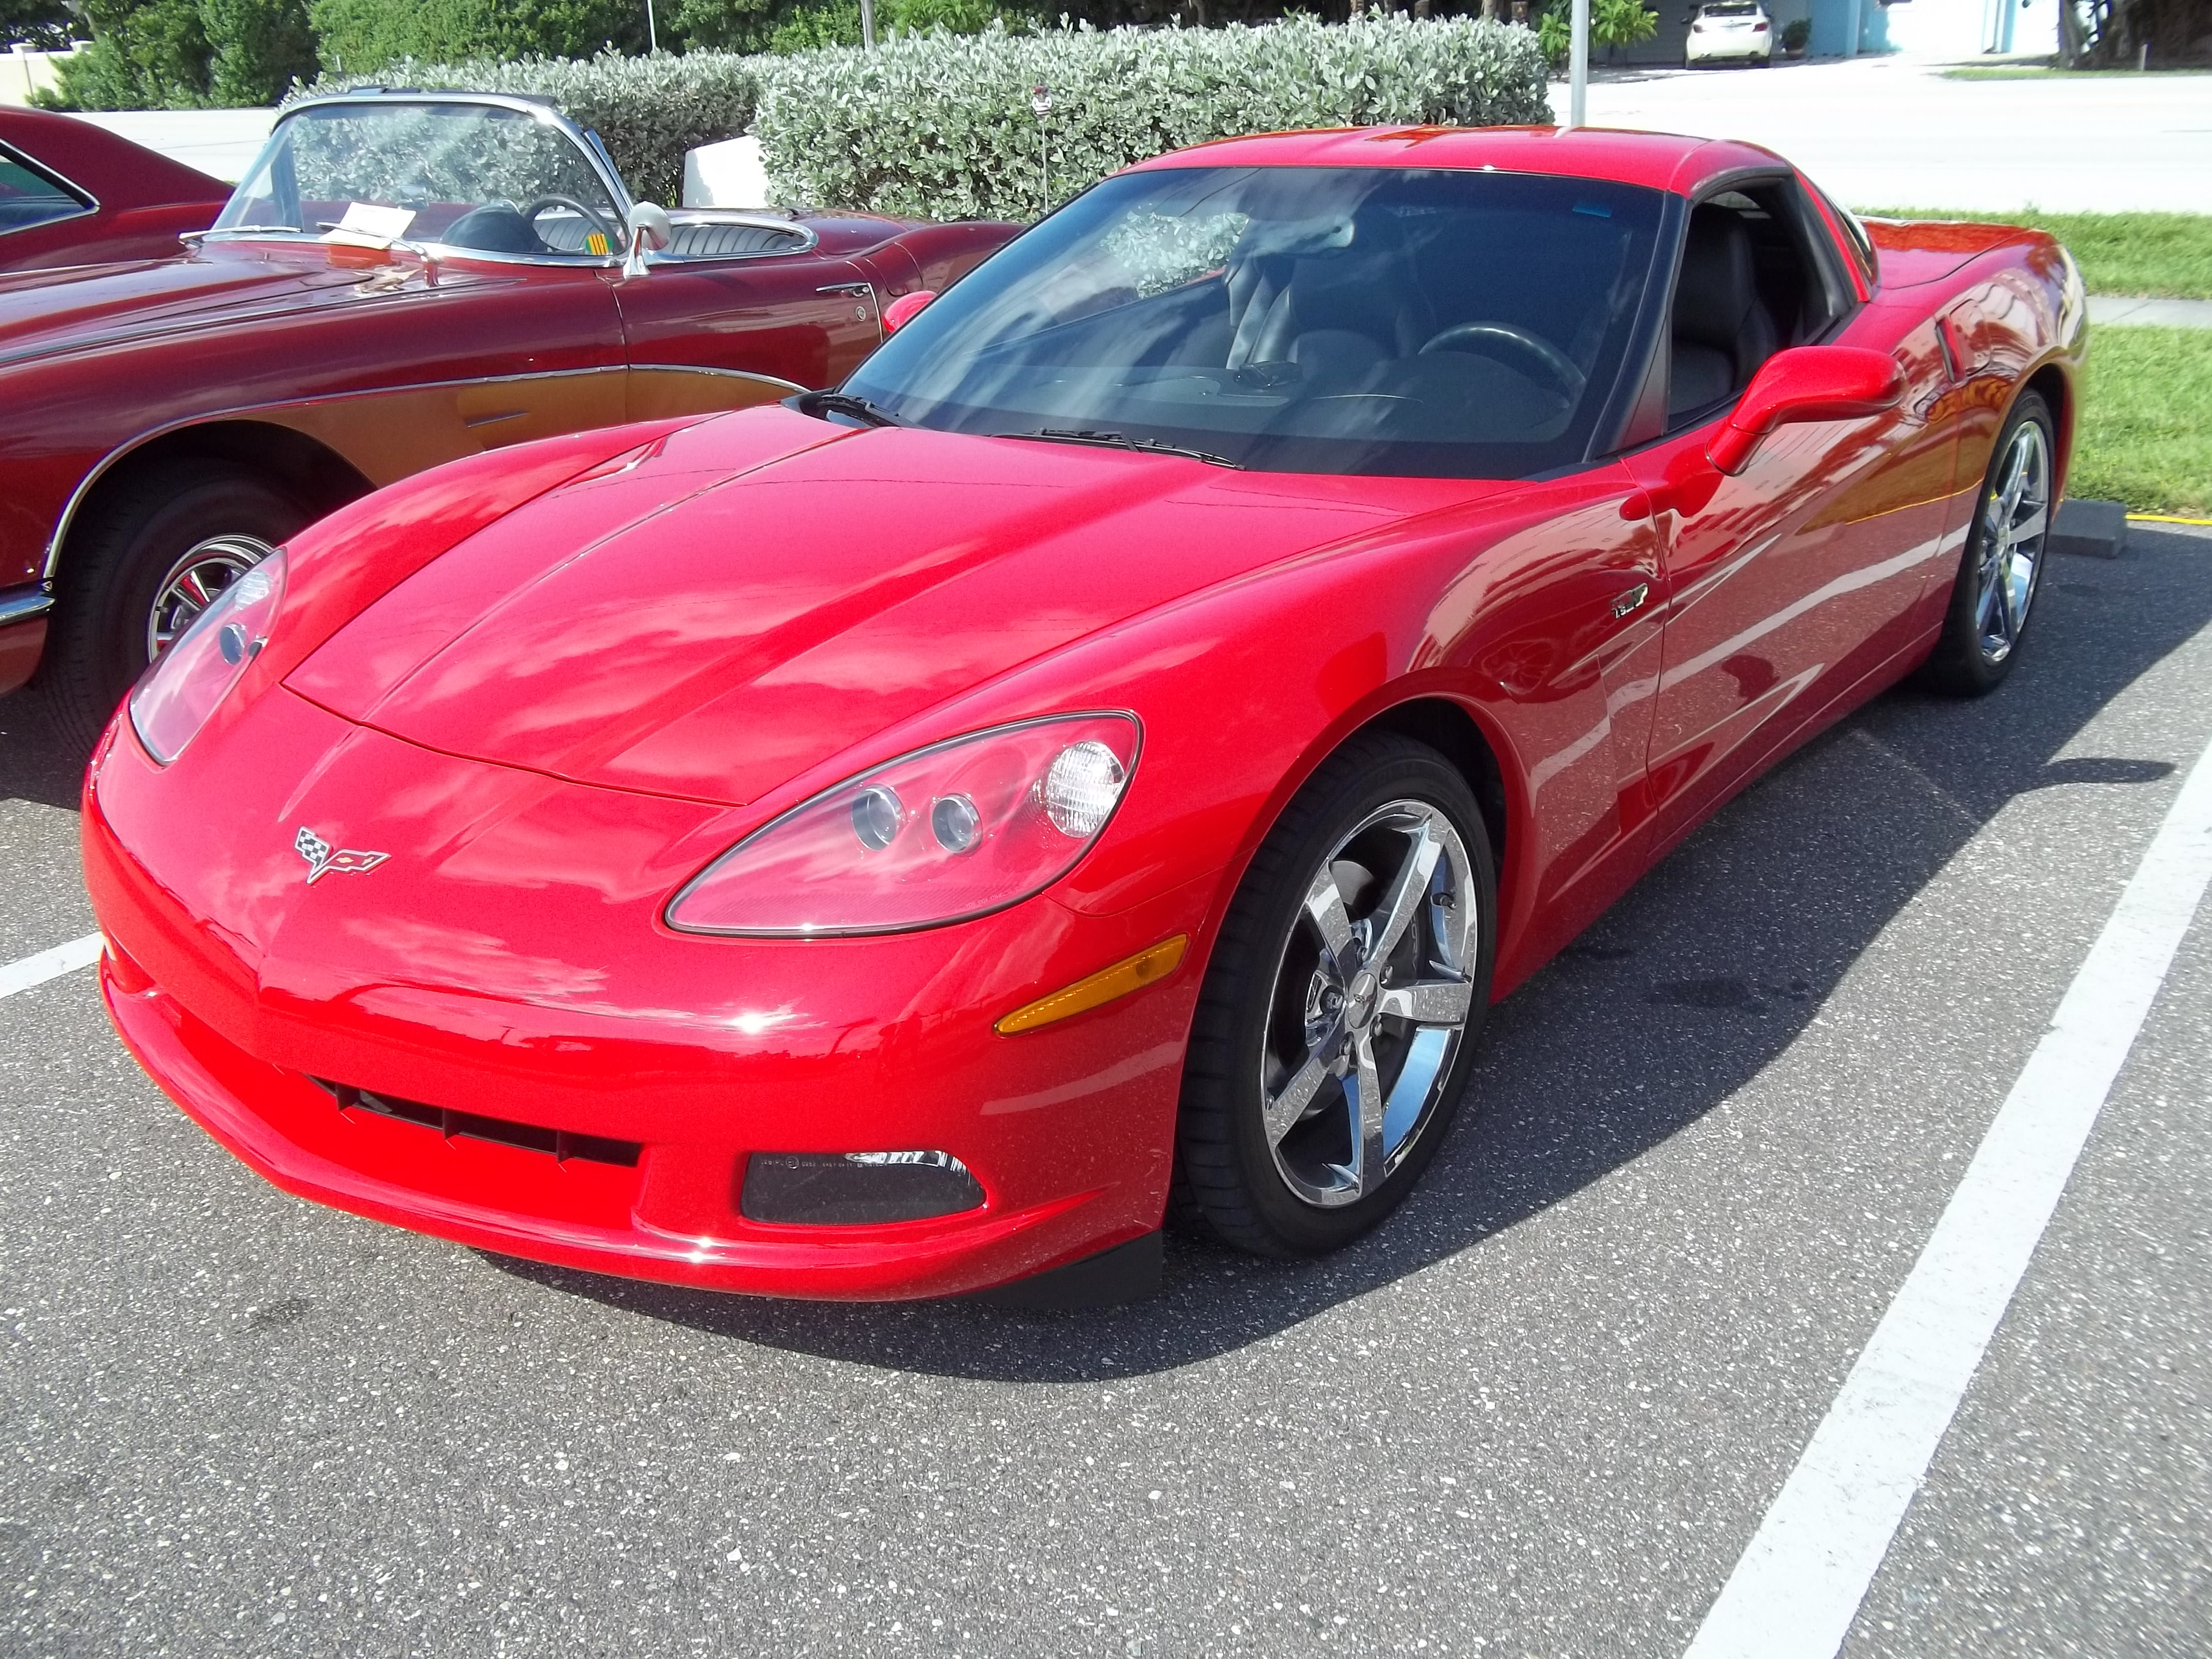 Rich F's 2012 Corvette